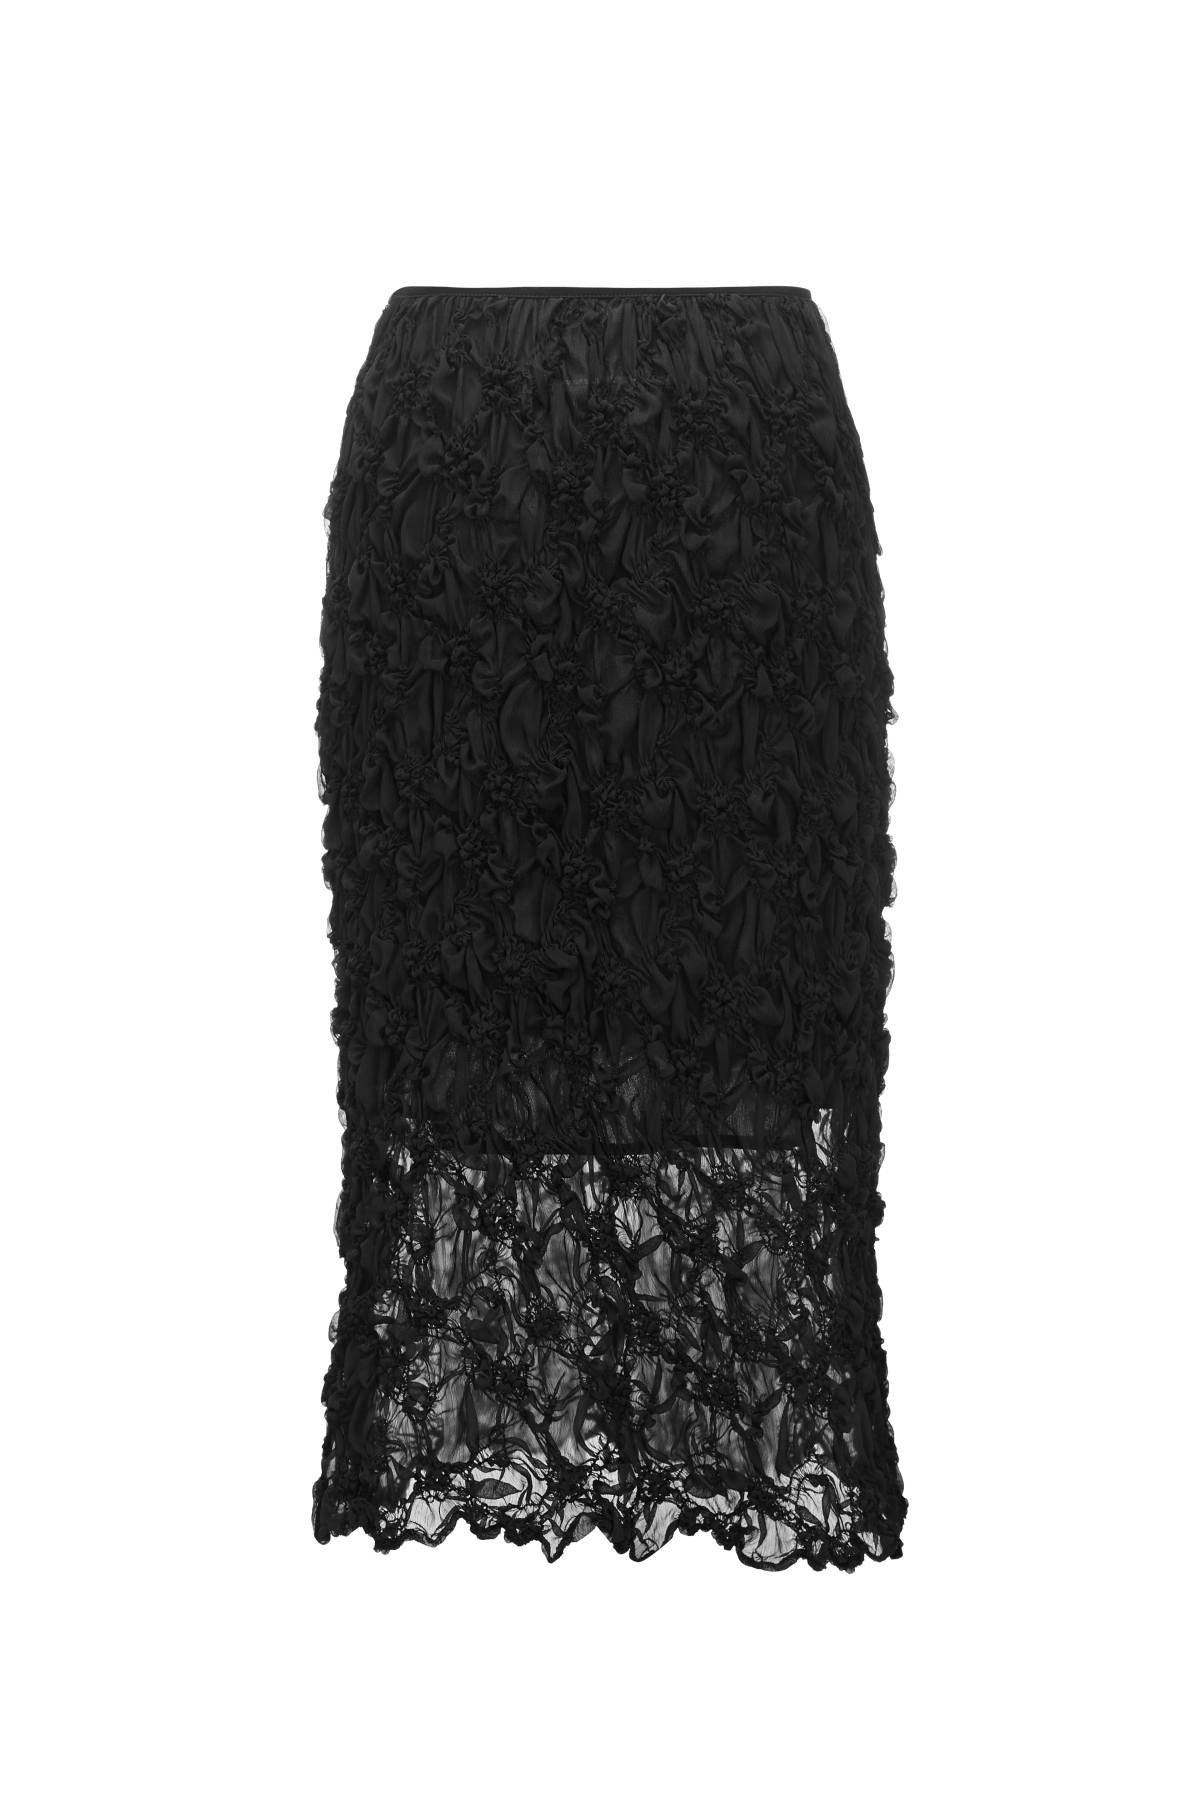 UUNIQ BESTDAY Black Tulle Ruched Midi Skirt